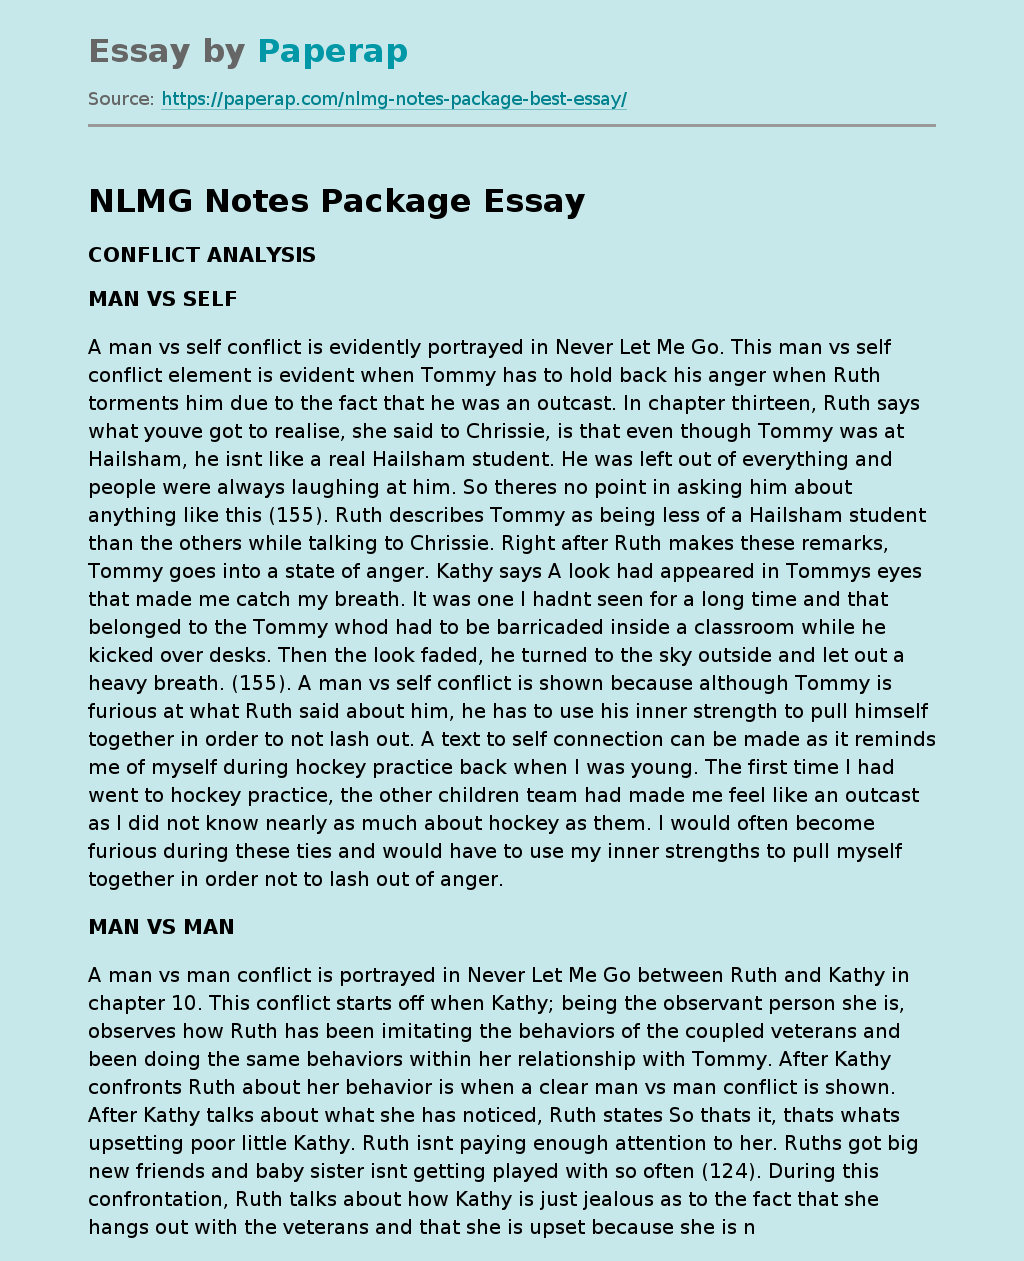 NLMG Notes Package